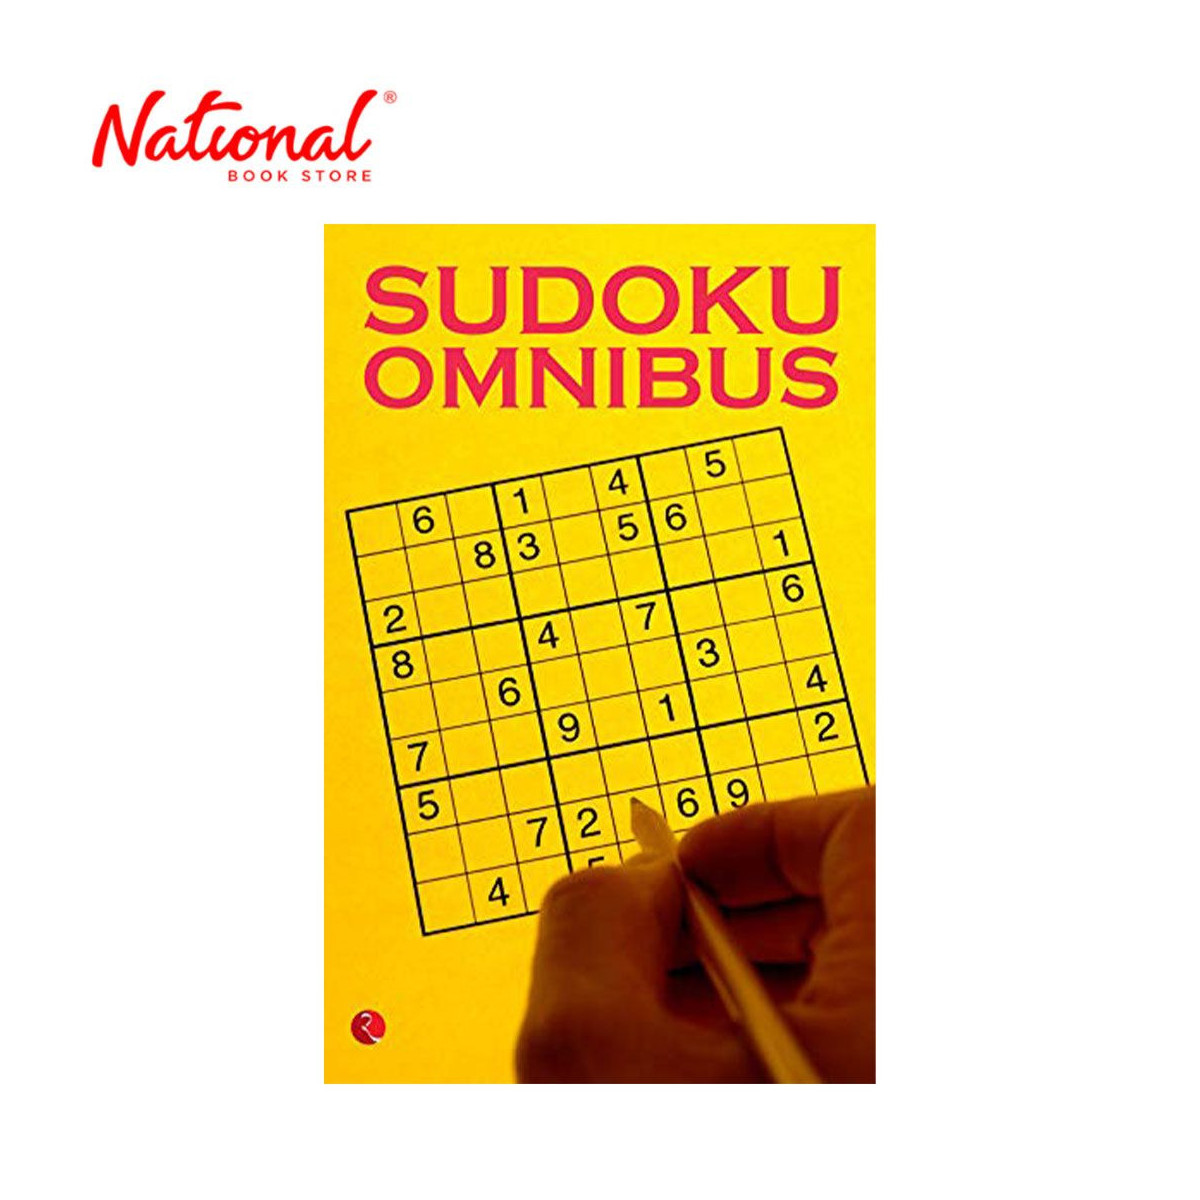 Sudoku Omnibus by Rupa - Trade Paperback - Games